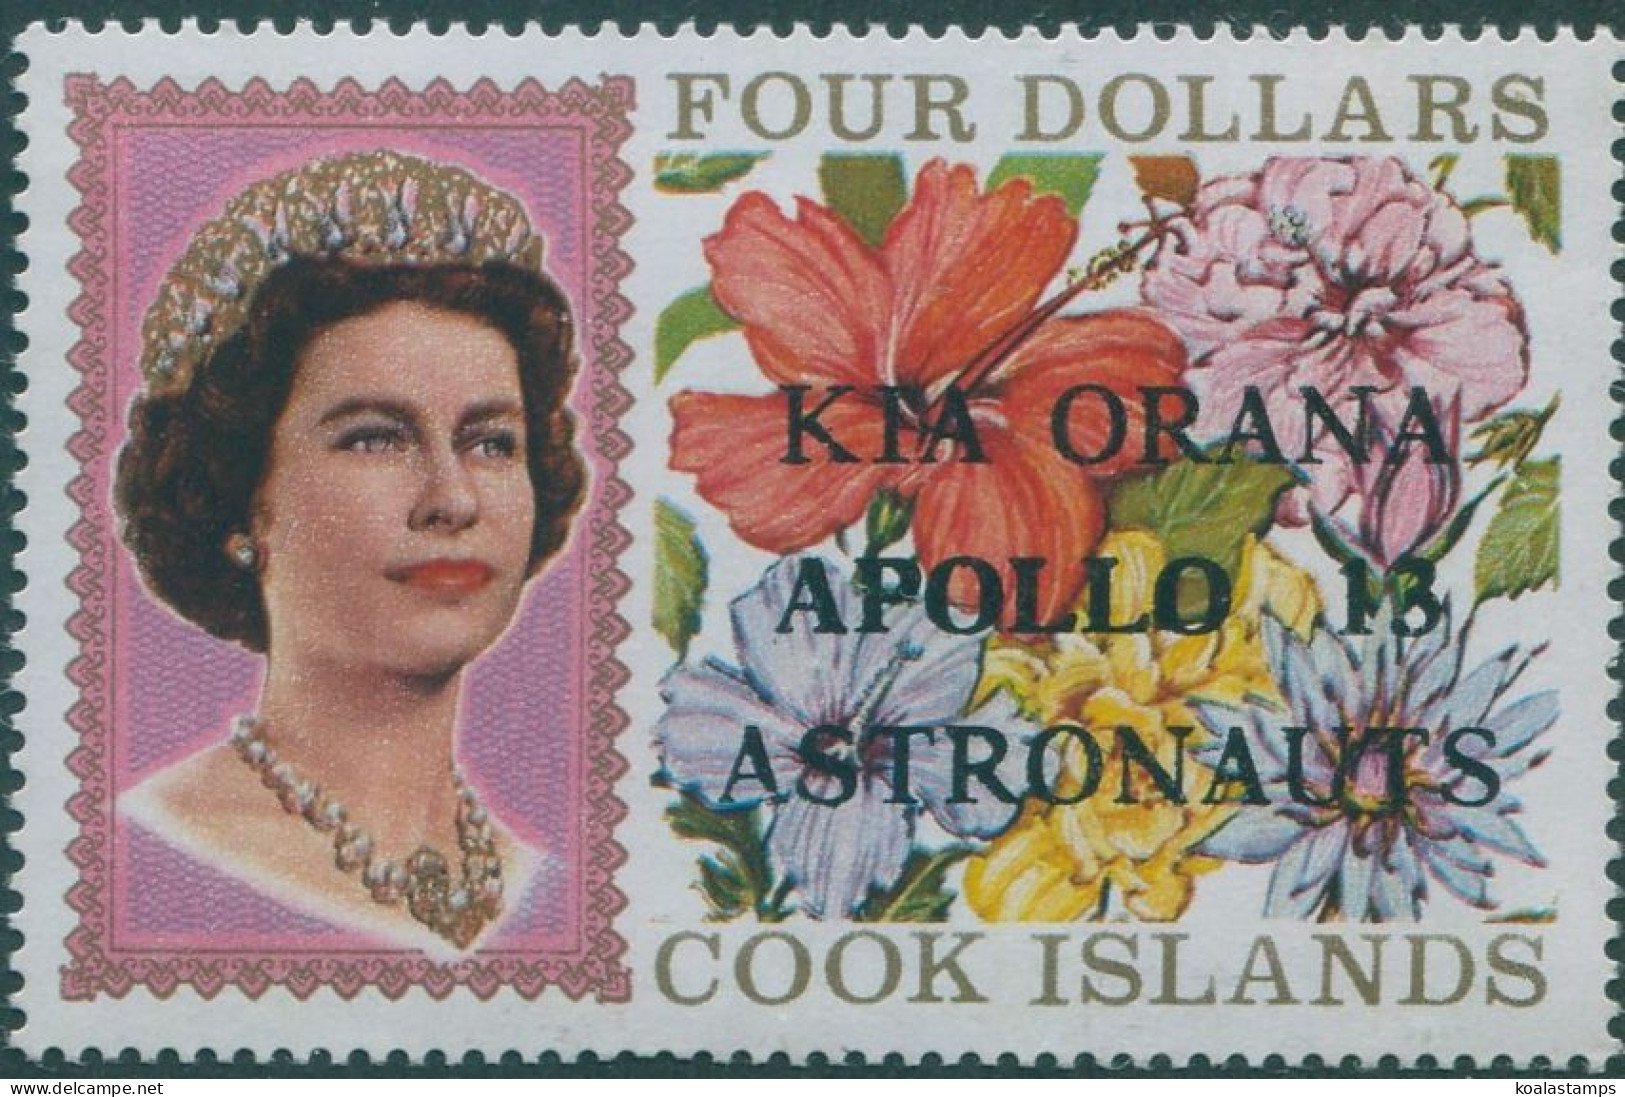 Cook Islands 1970 SG327 $4 QEII Flowers KIA ORANA APOLLO 13 ASTRONAUTS Ovpt MNH - Islas Cook